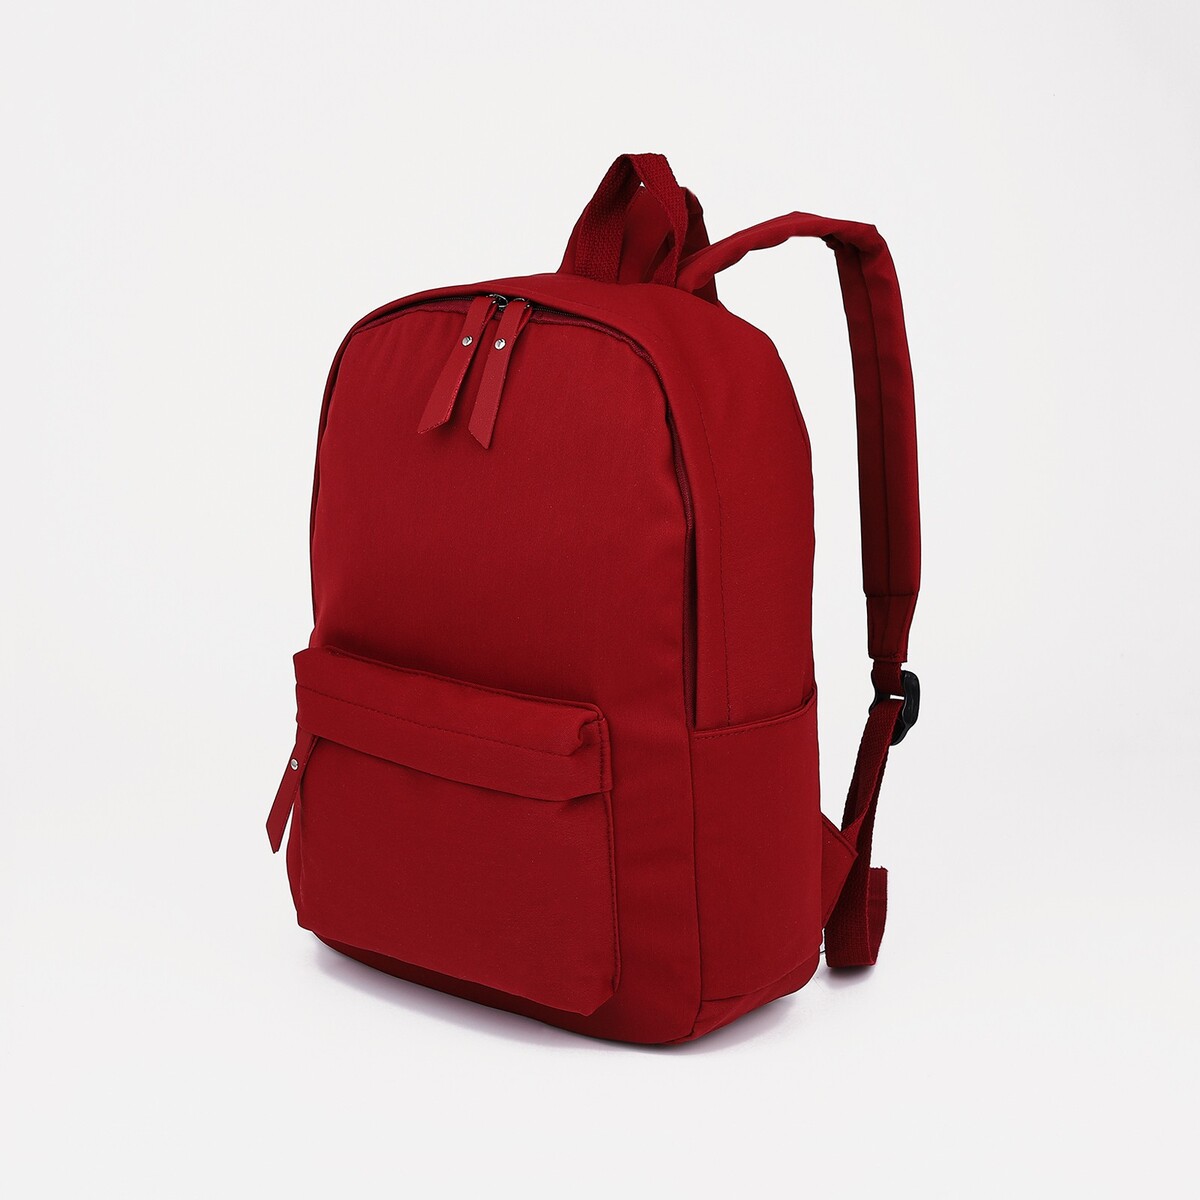 Рюкзак молодежный из текстиля, 4 кармана, цвет бордовый рюкзак молодежный из текстиля 4 кармана бордовый